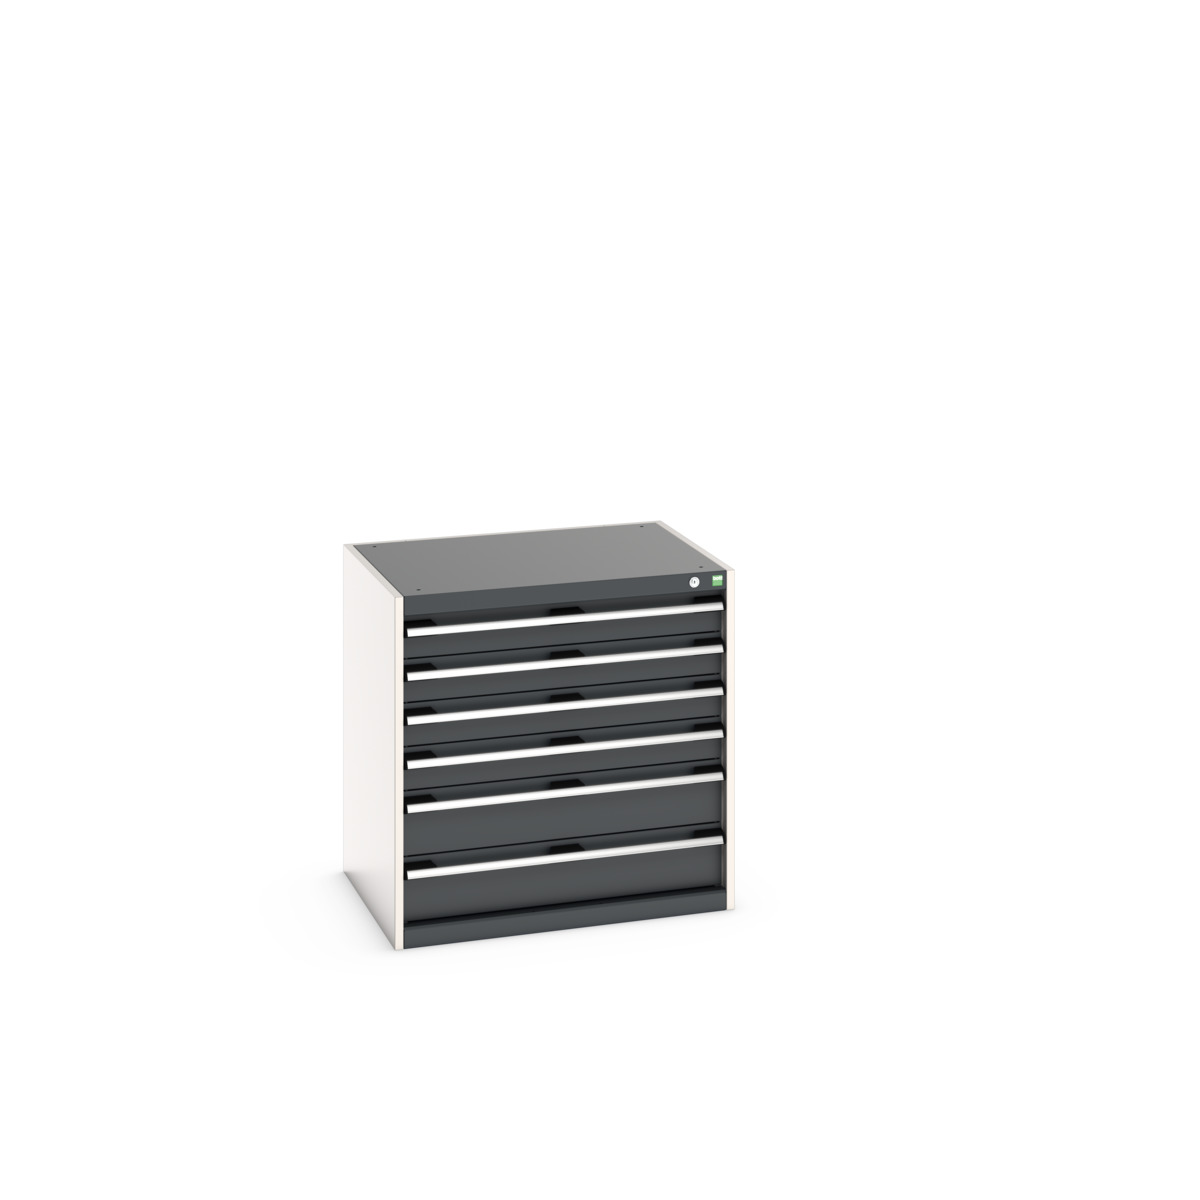 40020139. - cubio drawer cabinet